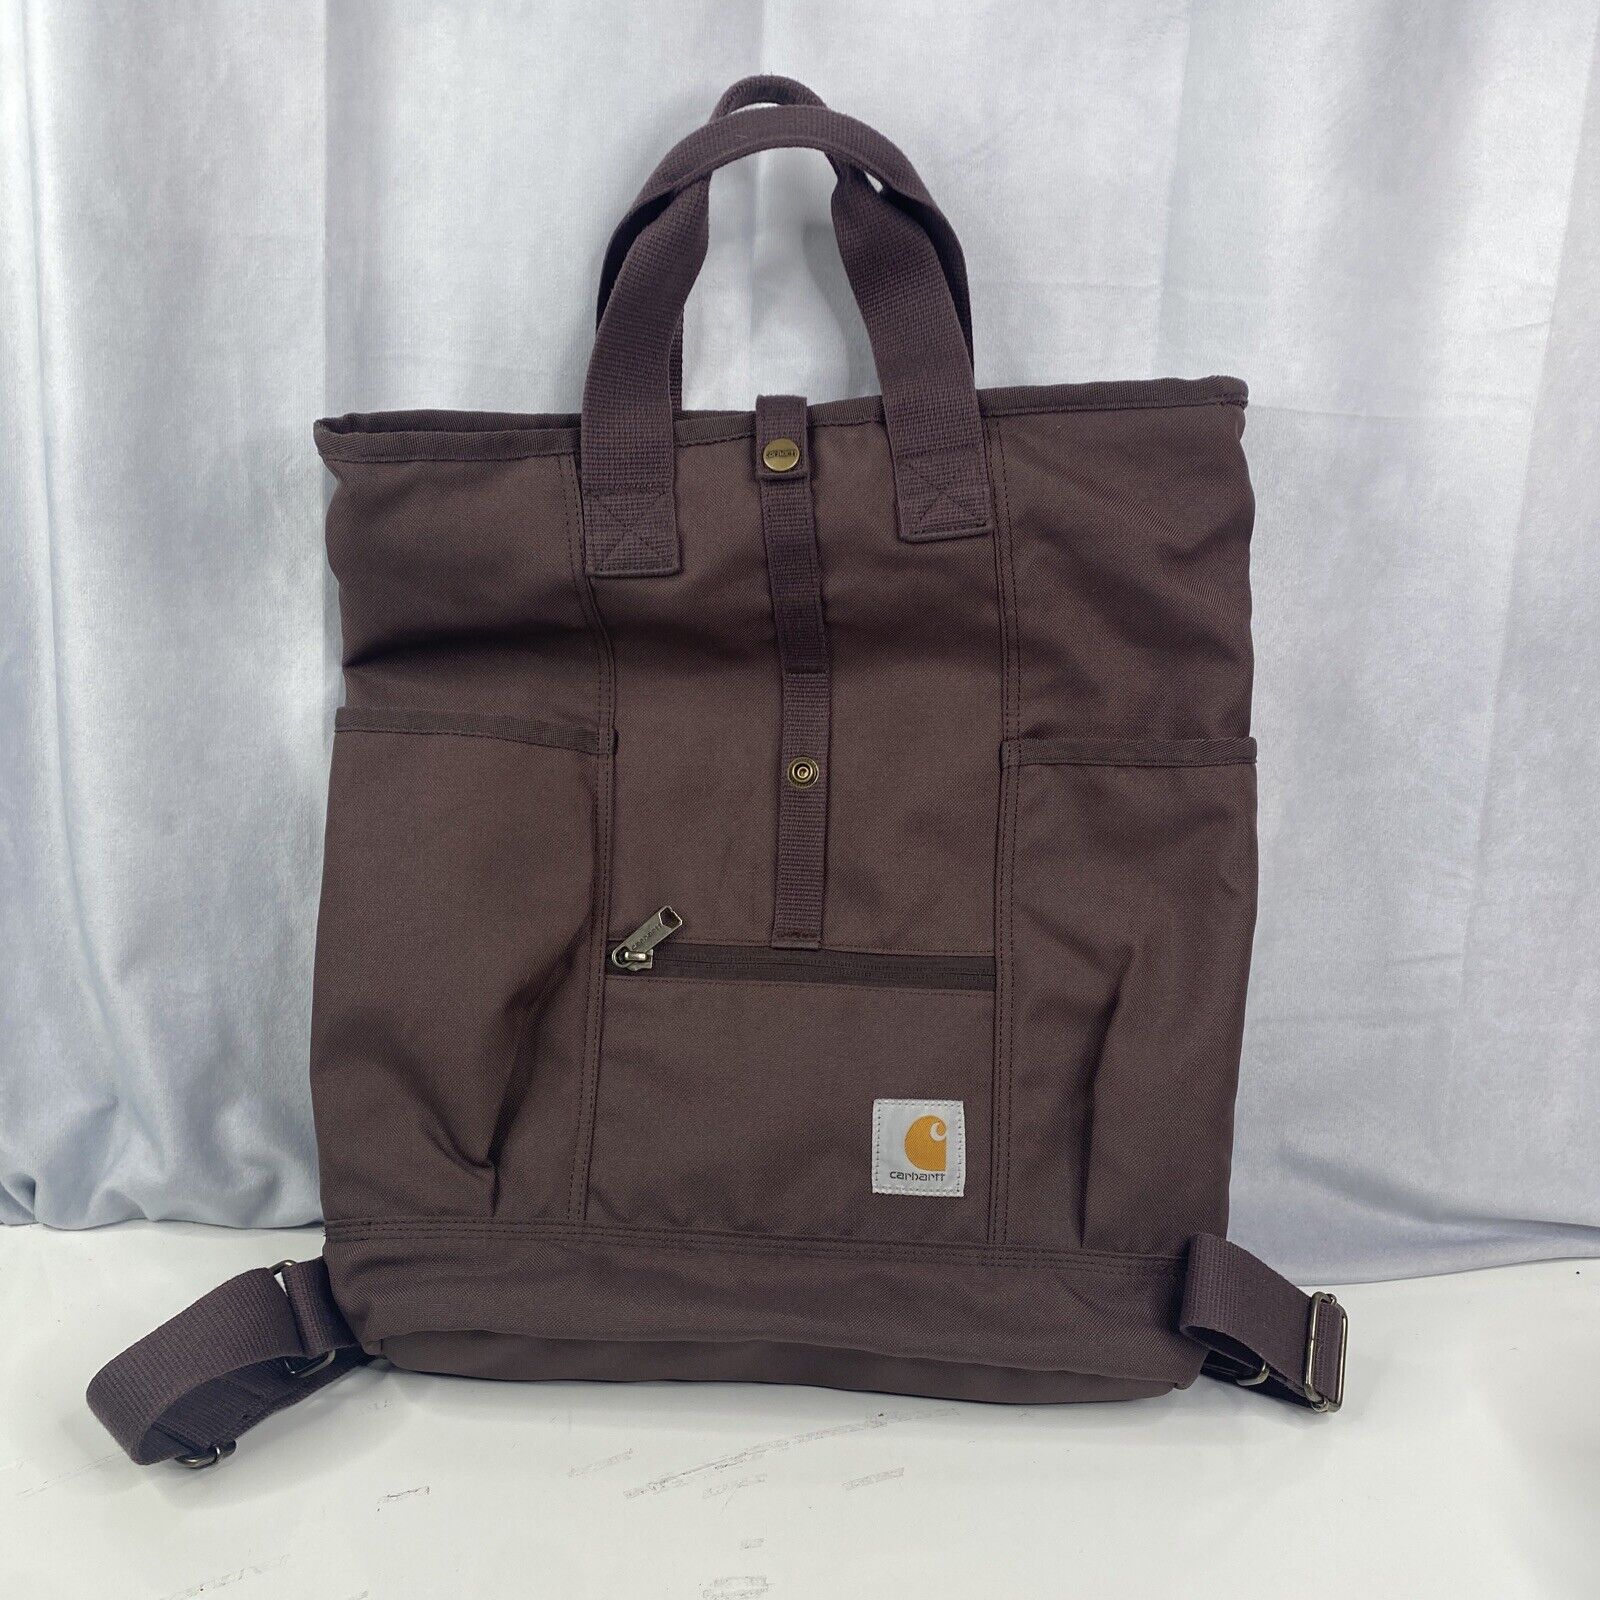 Carhartt Wine Legacy Hybrid Convertible Backpack Laptop Tote Shoulder Bag NICE